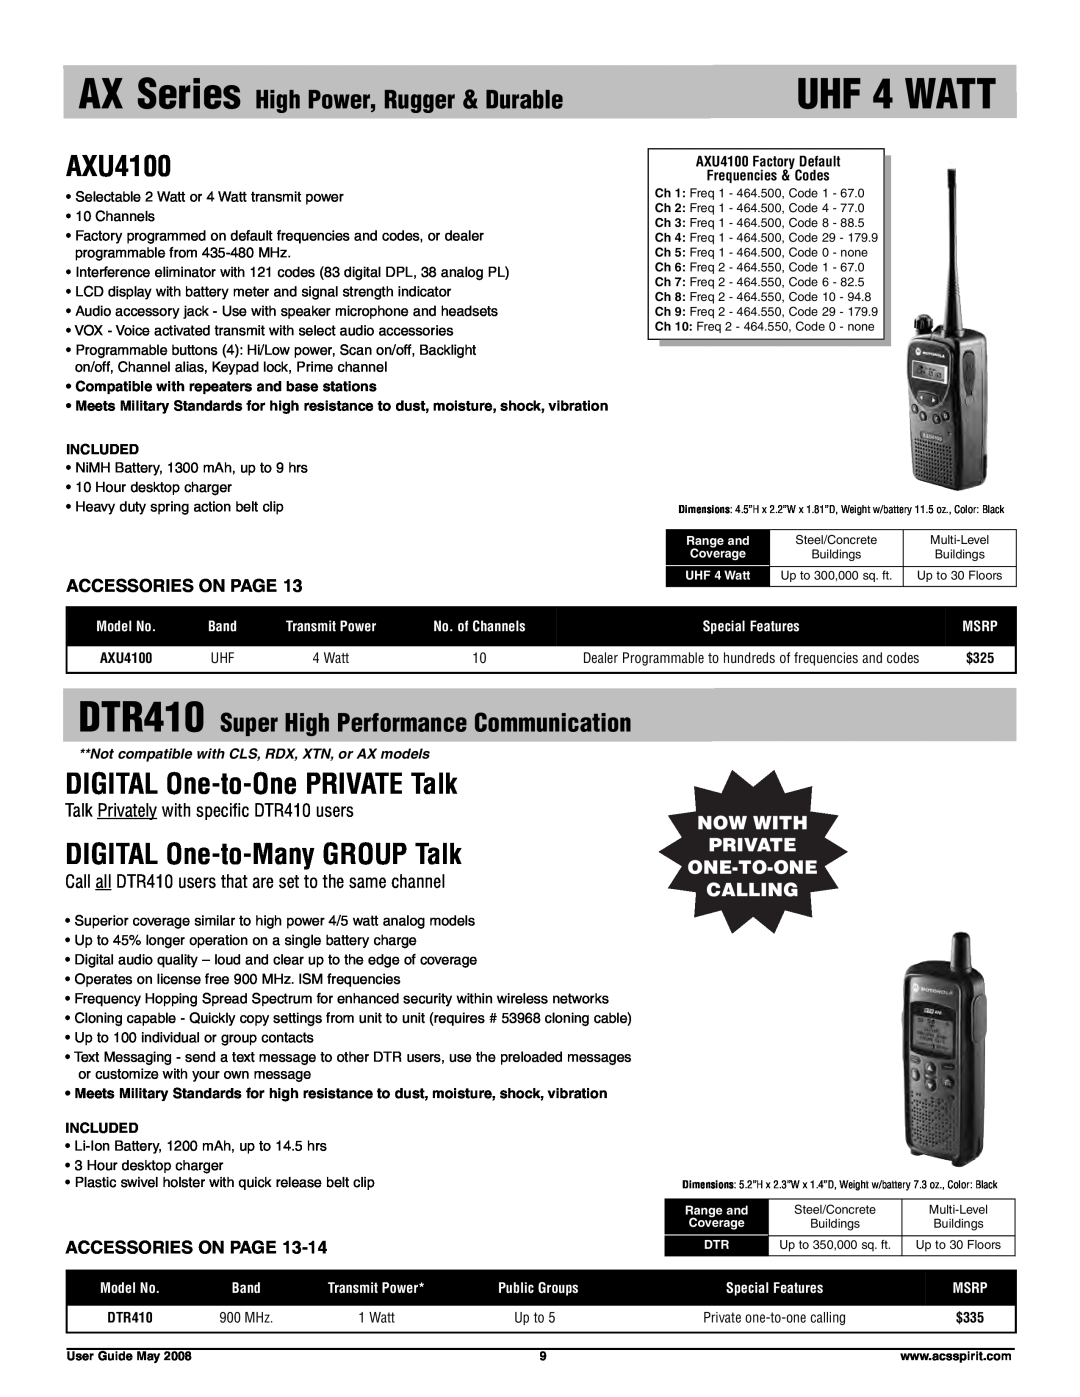 Motorola RDU4160D, RDV5100 UHF 4 WATT, AXU4100, DIGITAL One-to-One PRIVATE Talk, DIGITAL One-to-Many GROUP Talk, Included 